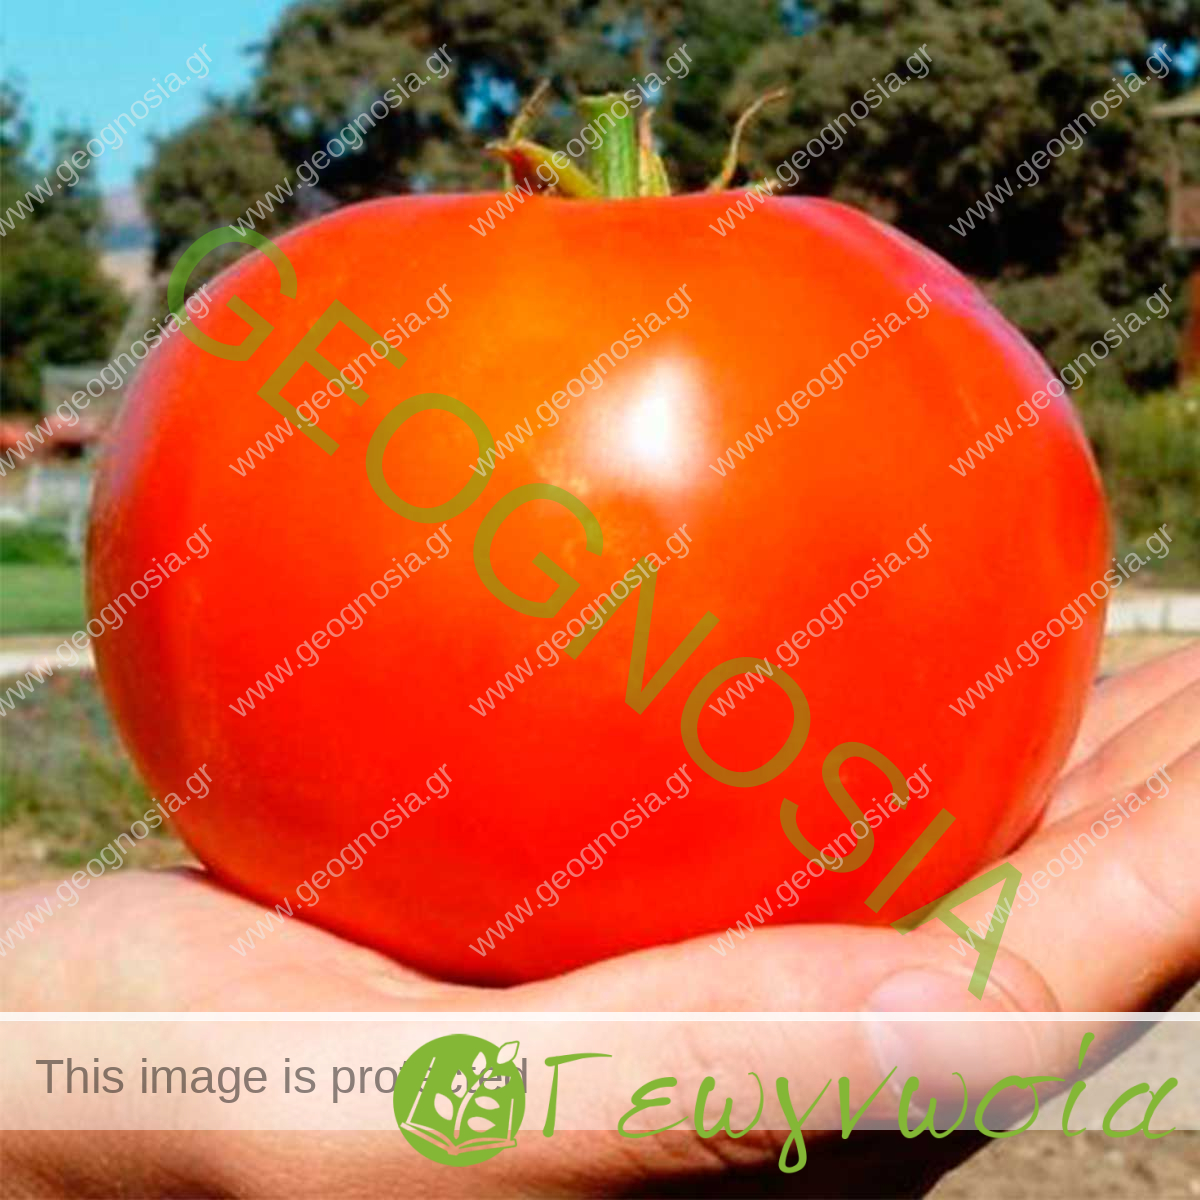 sporoi-tomatas-aytokladeyomenis-tyking-f1-unigen-seeds